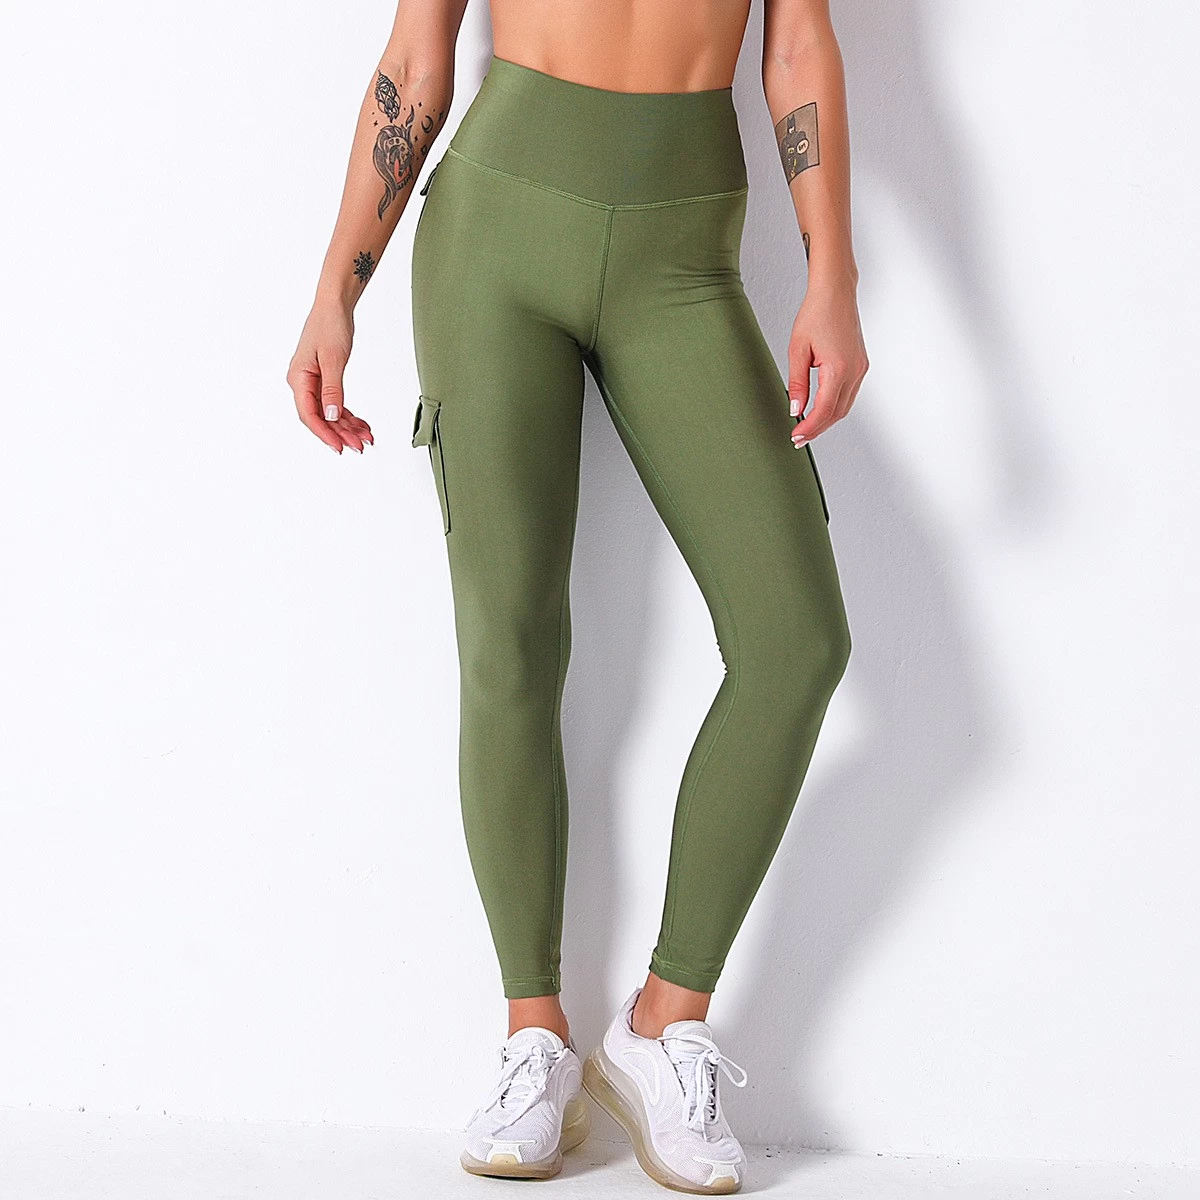 S-SHAPER Women's Seamless High Waist Yoga Pants with Pockets Cargo Yoga Pants Tummy Control Workout Yoga Leggings Factory